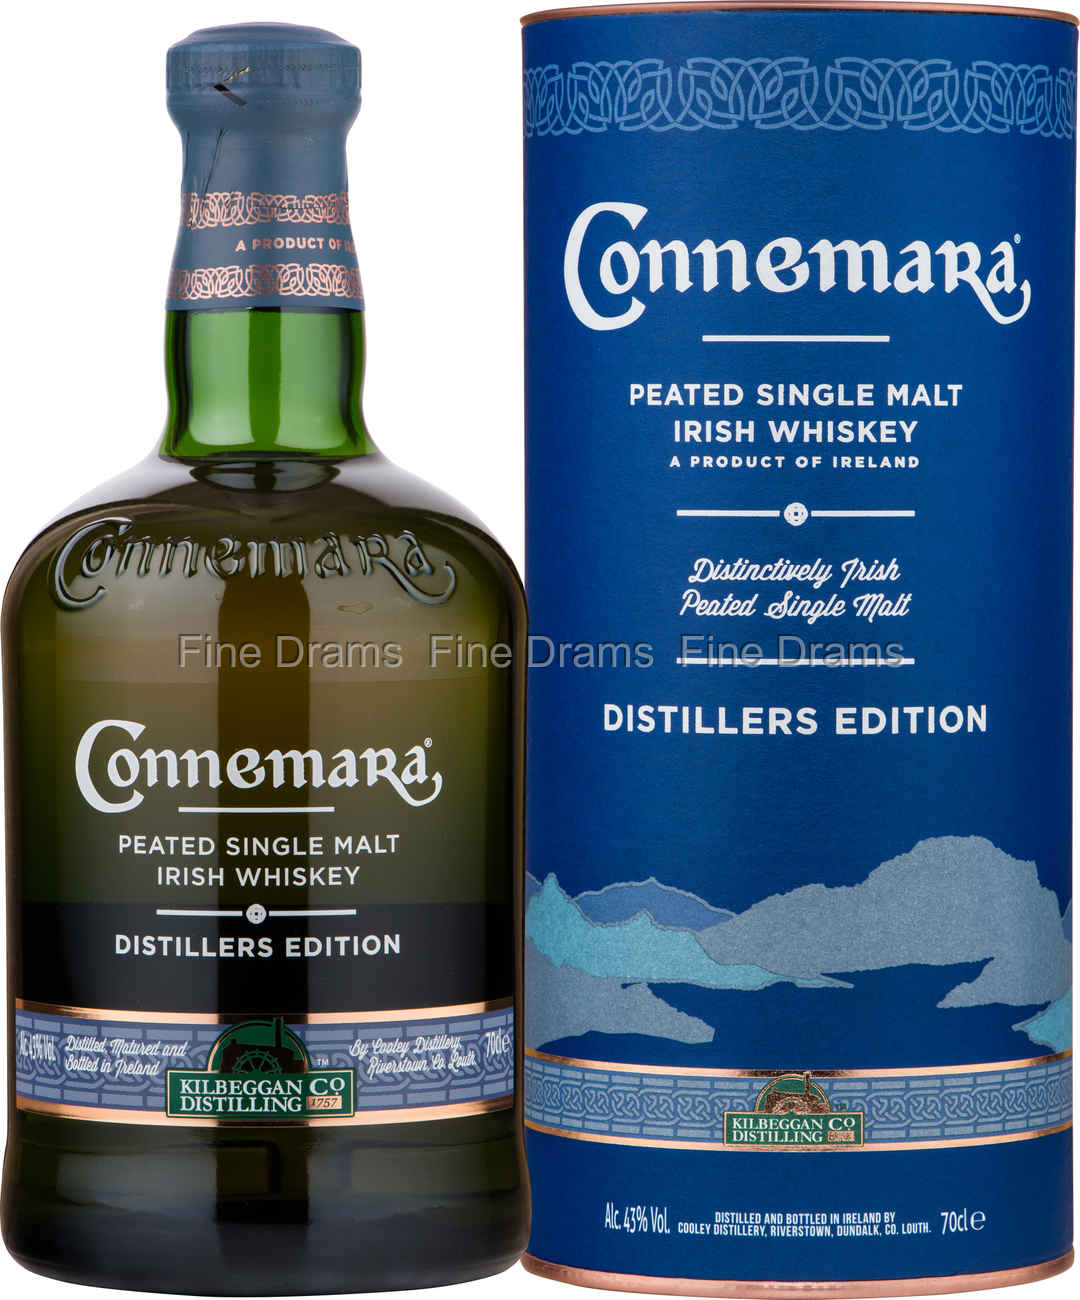 The Connemara®  Peated Single Malt Irish Whiskey